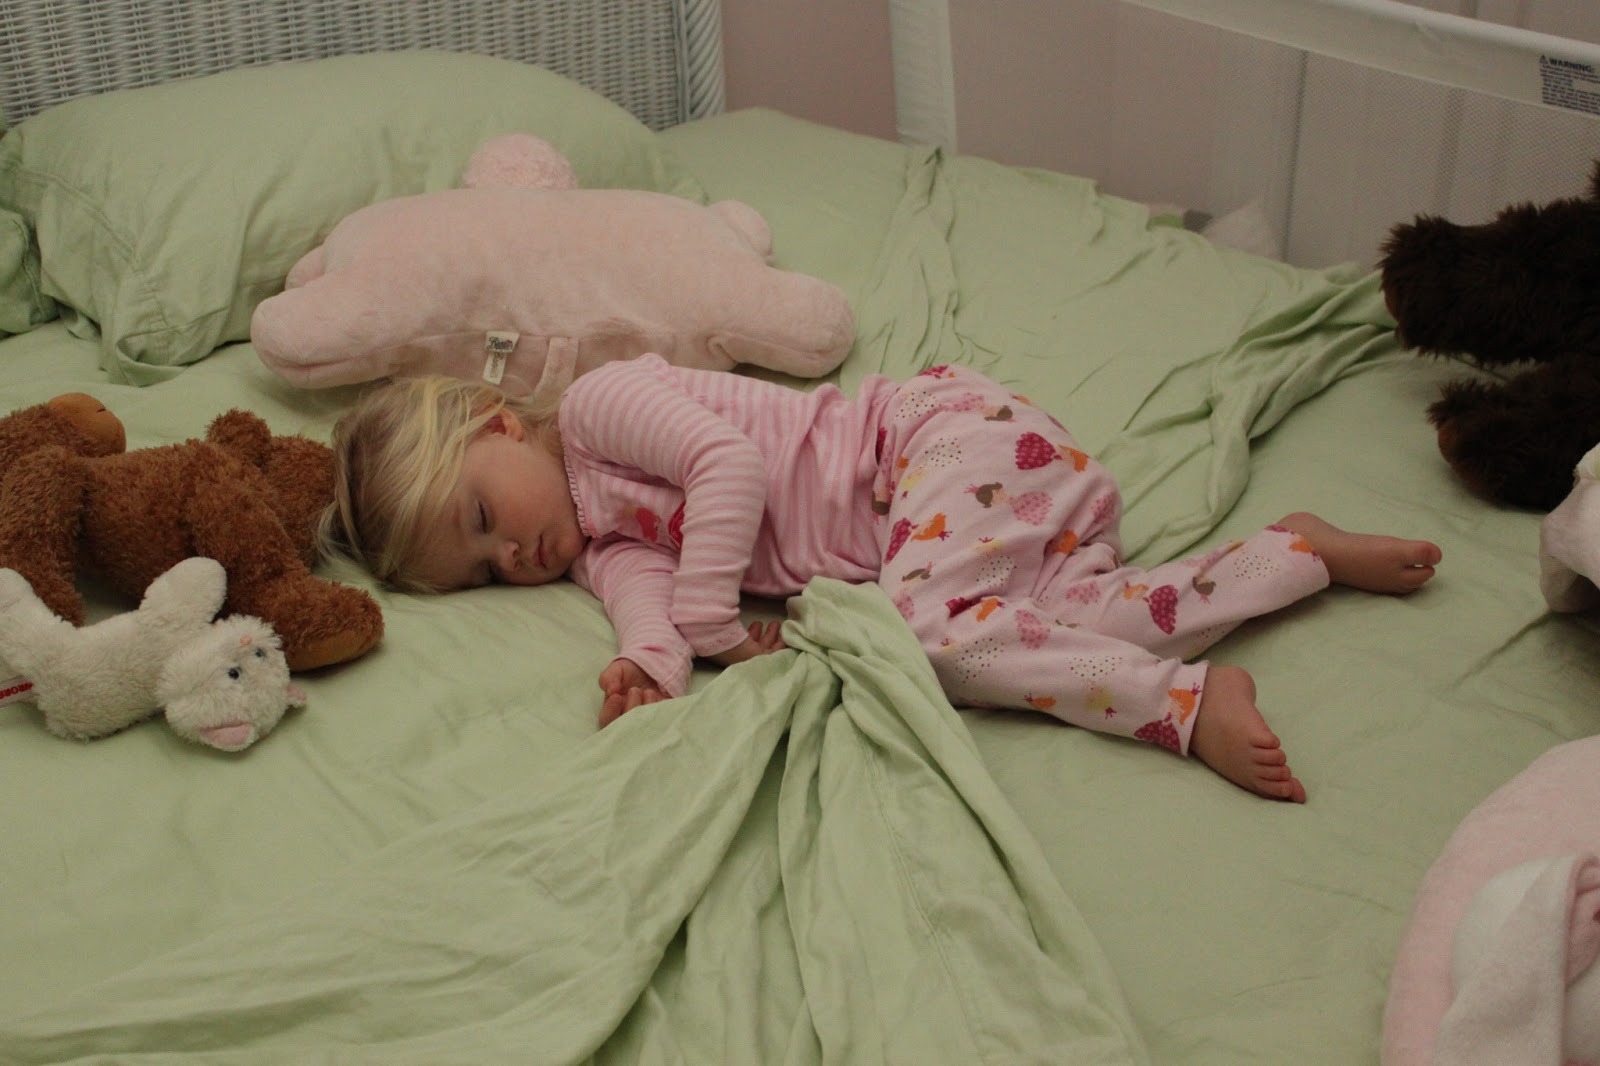 Sleep on dear little child. Слип герл. Тодлер девочка. Кровать для тоддлера младенец ру. Девочка тоддлер в кровати.